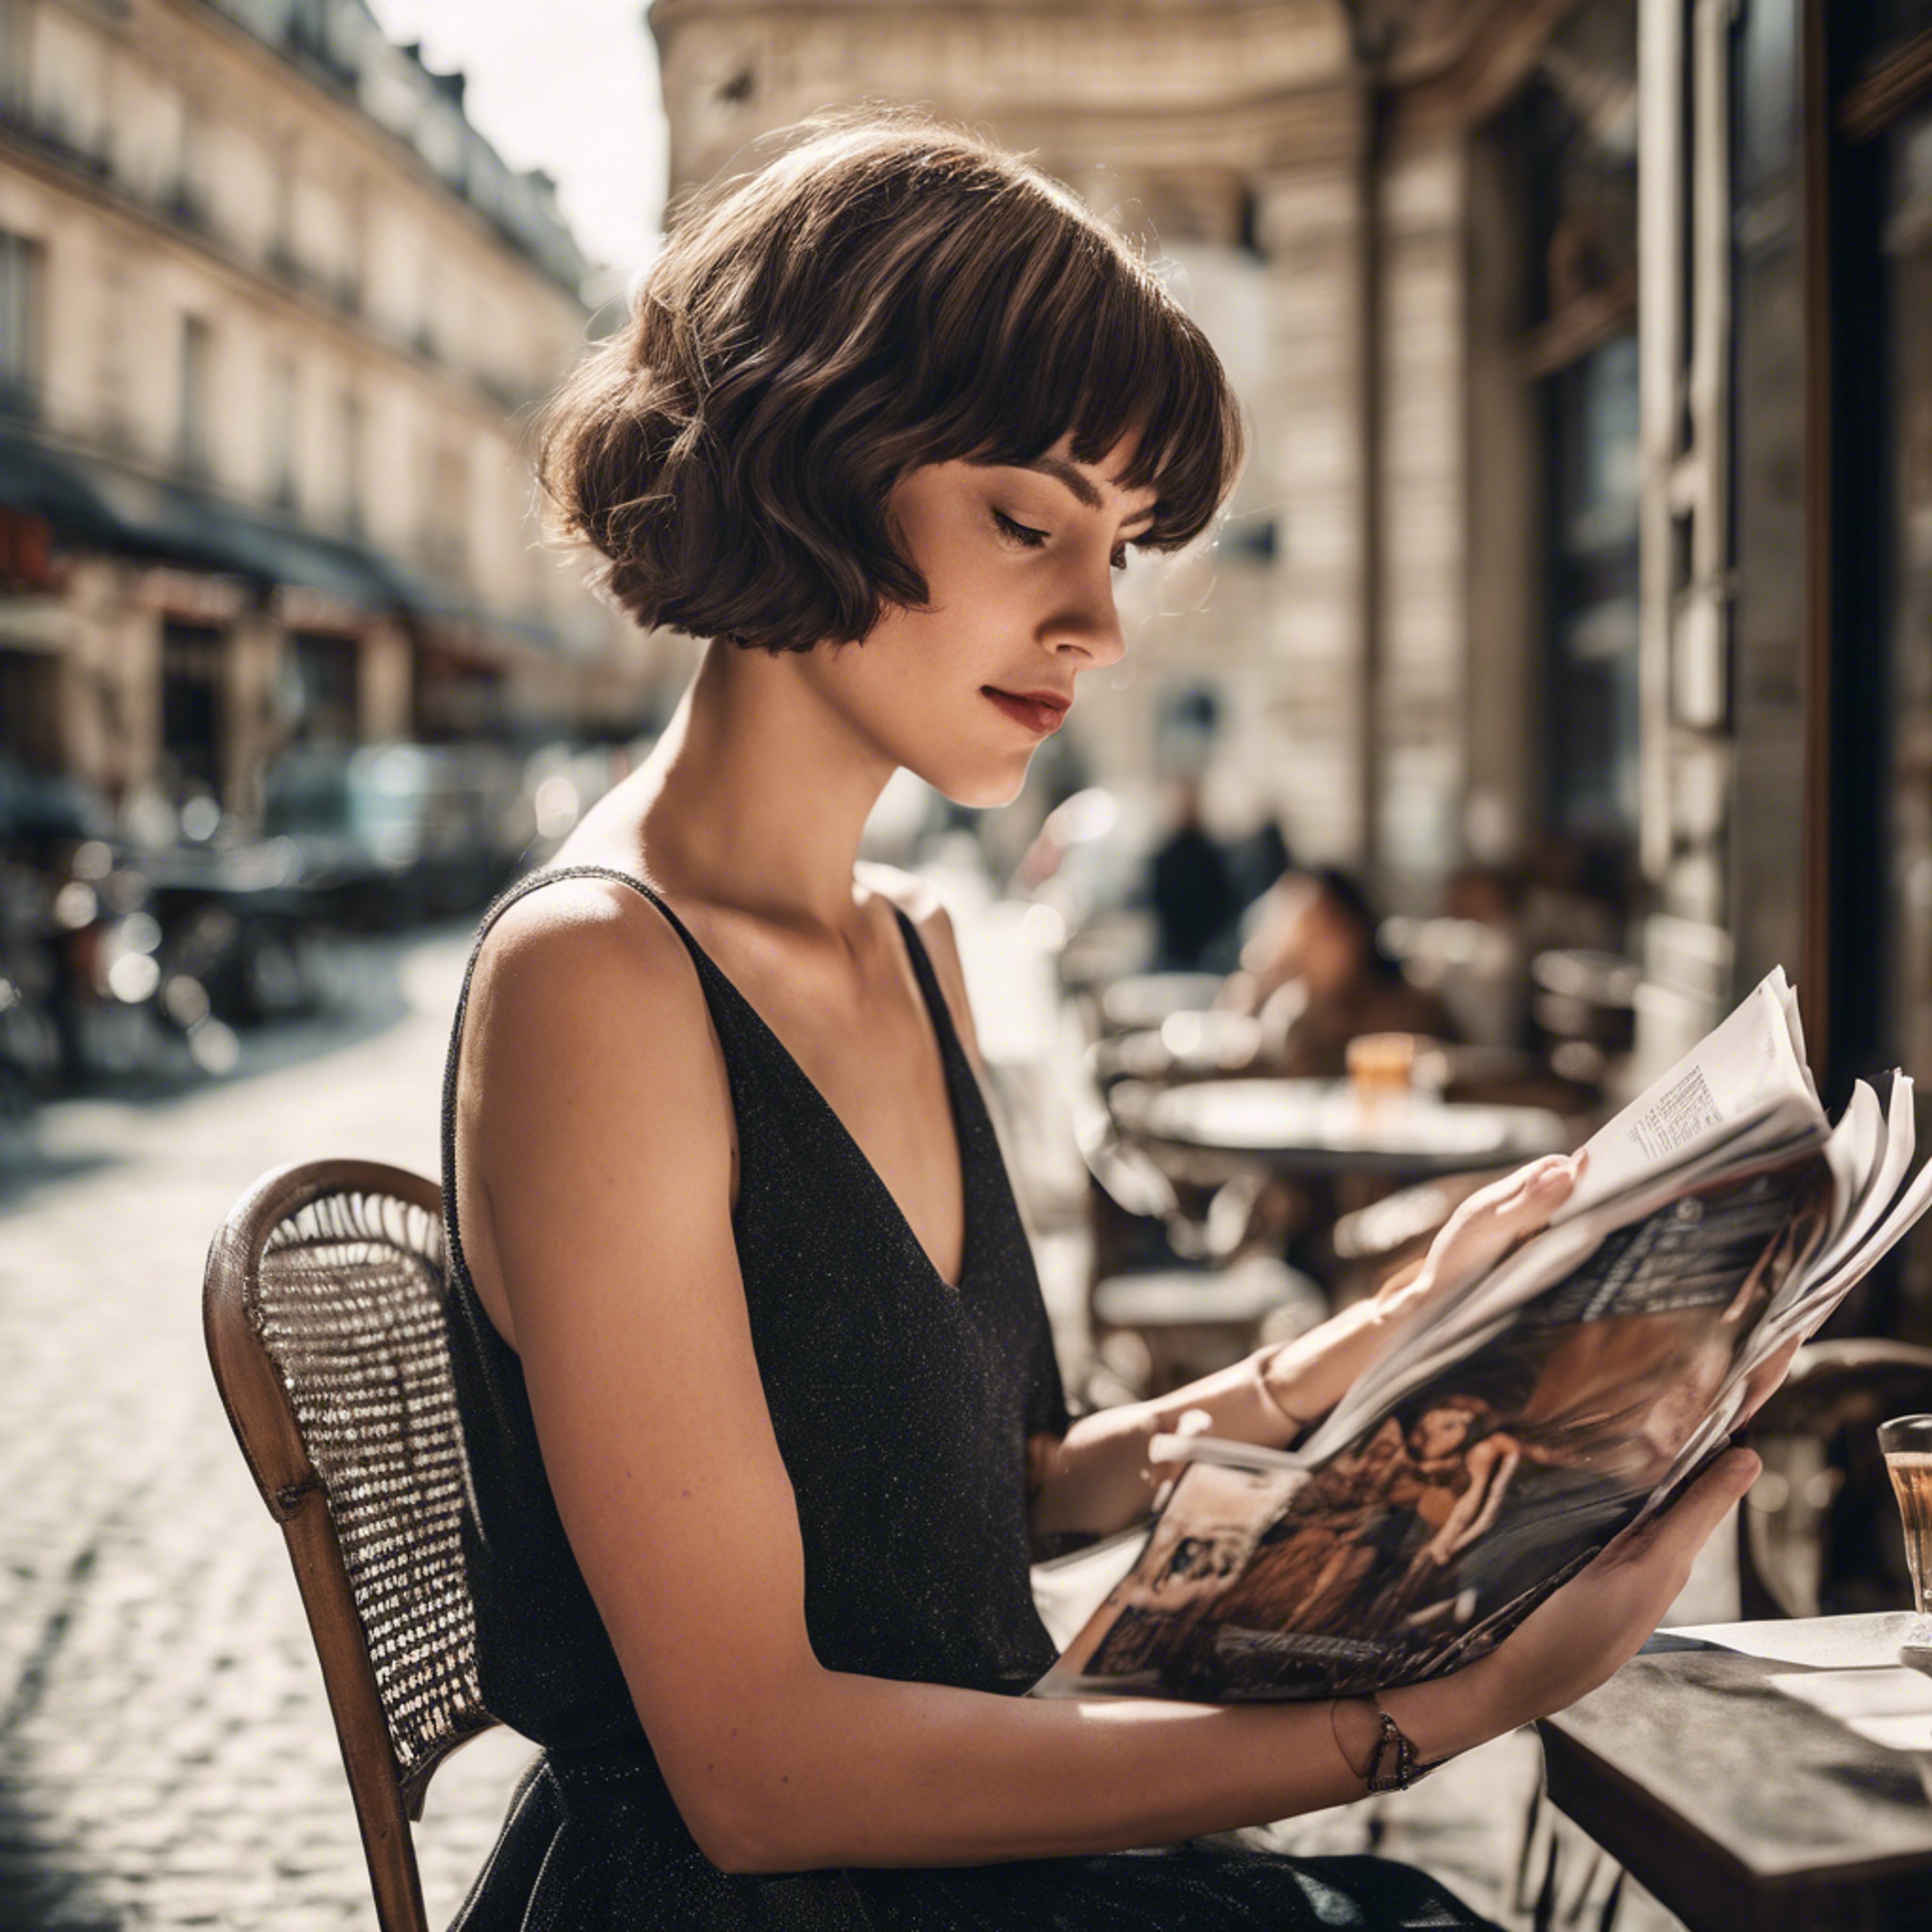 A young woman with a chic French bob haircut reading a fashion magazine at a Parisian café. Обои[b1696e20e31b4962ac1f]